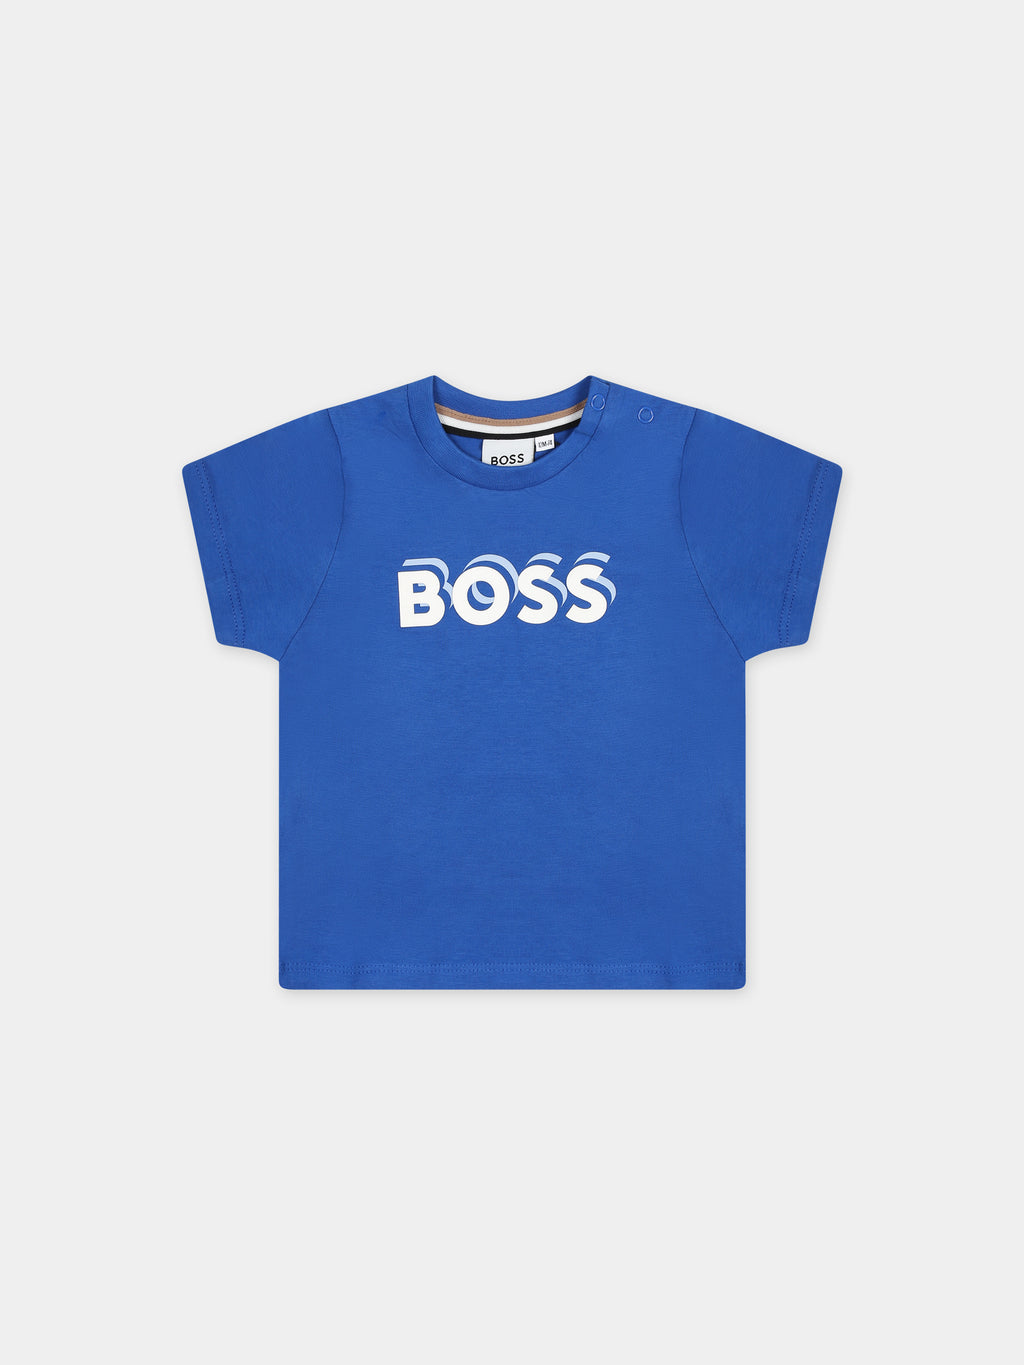 T-shirt bleu clair pour bébé garçon avec logo